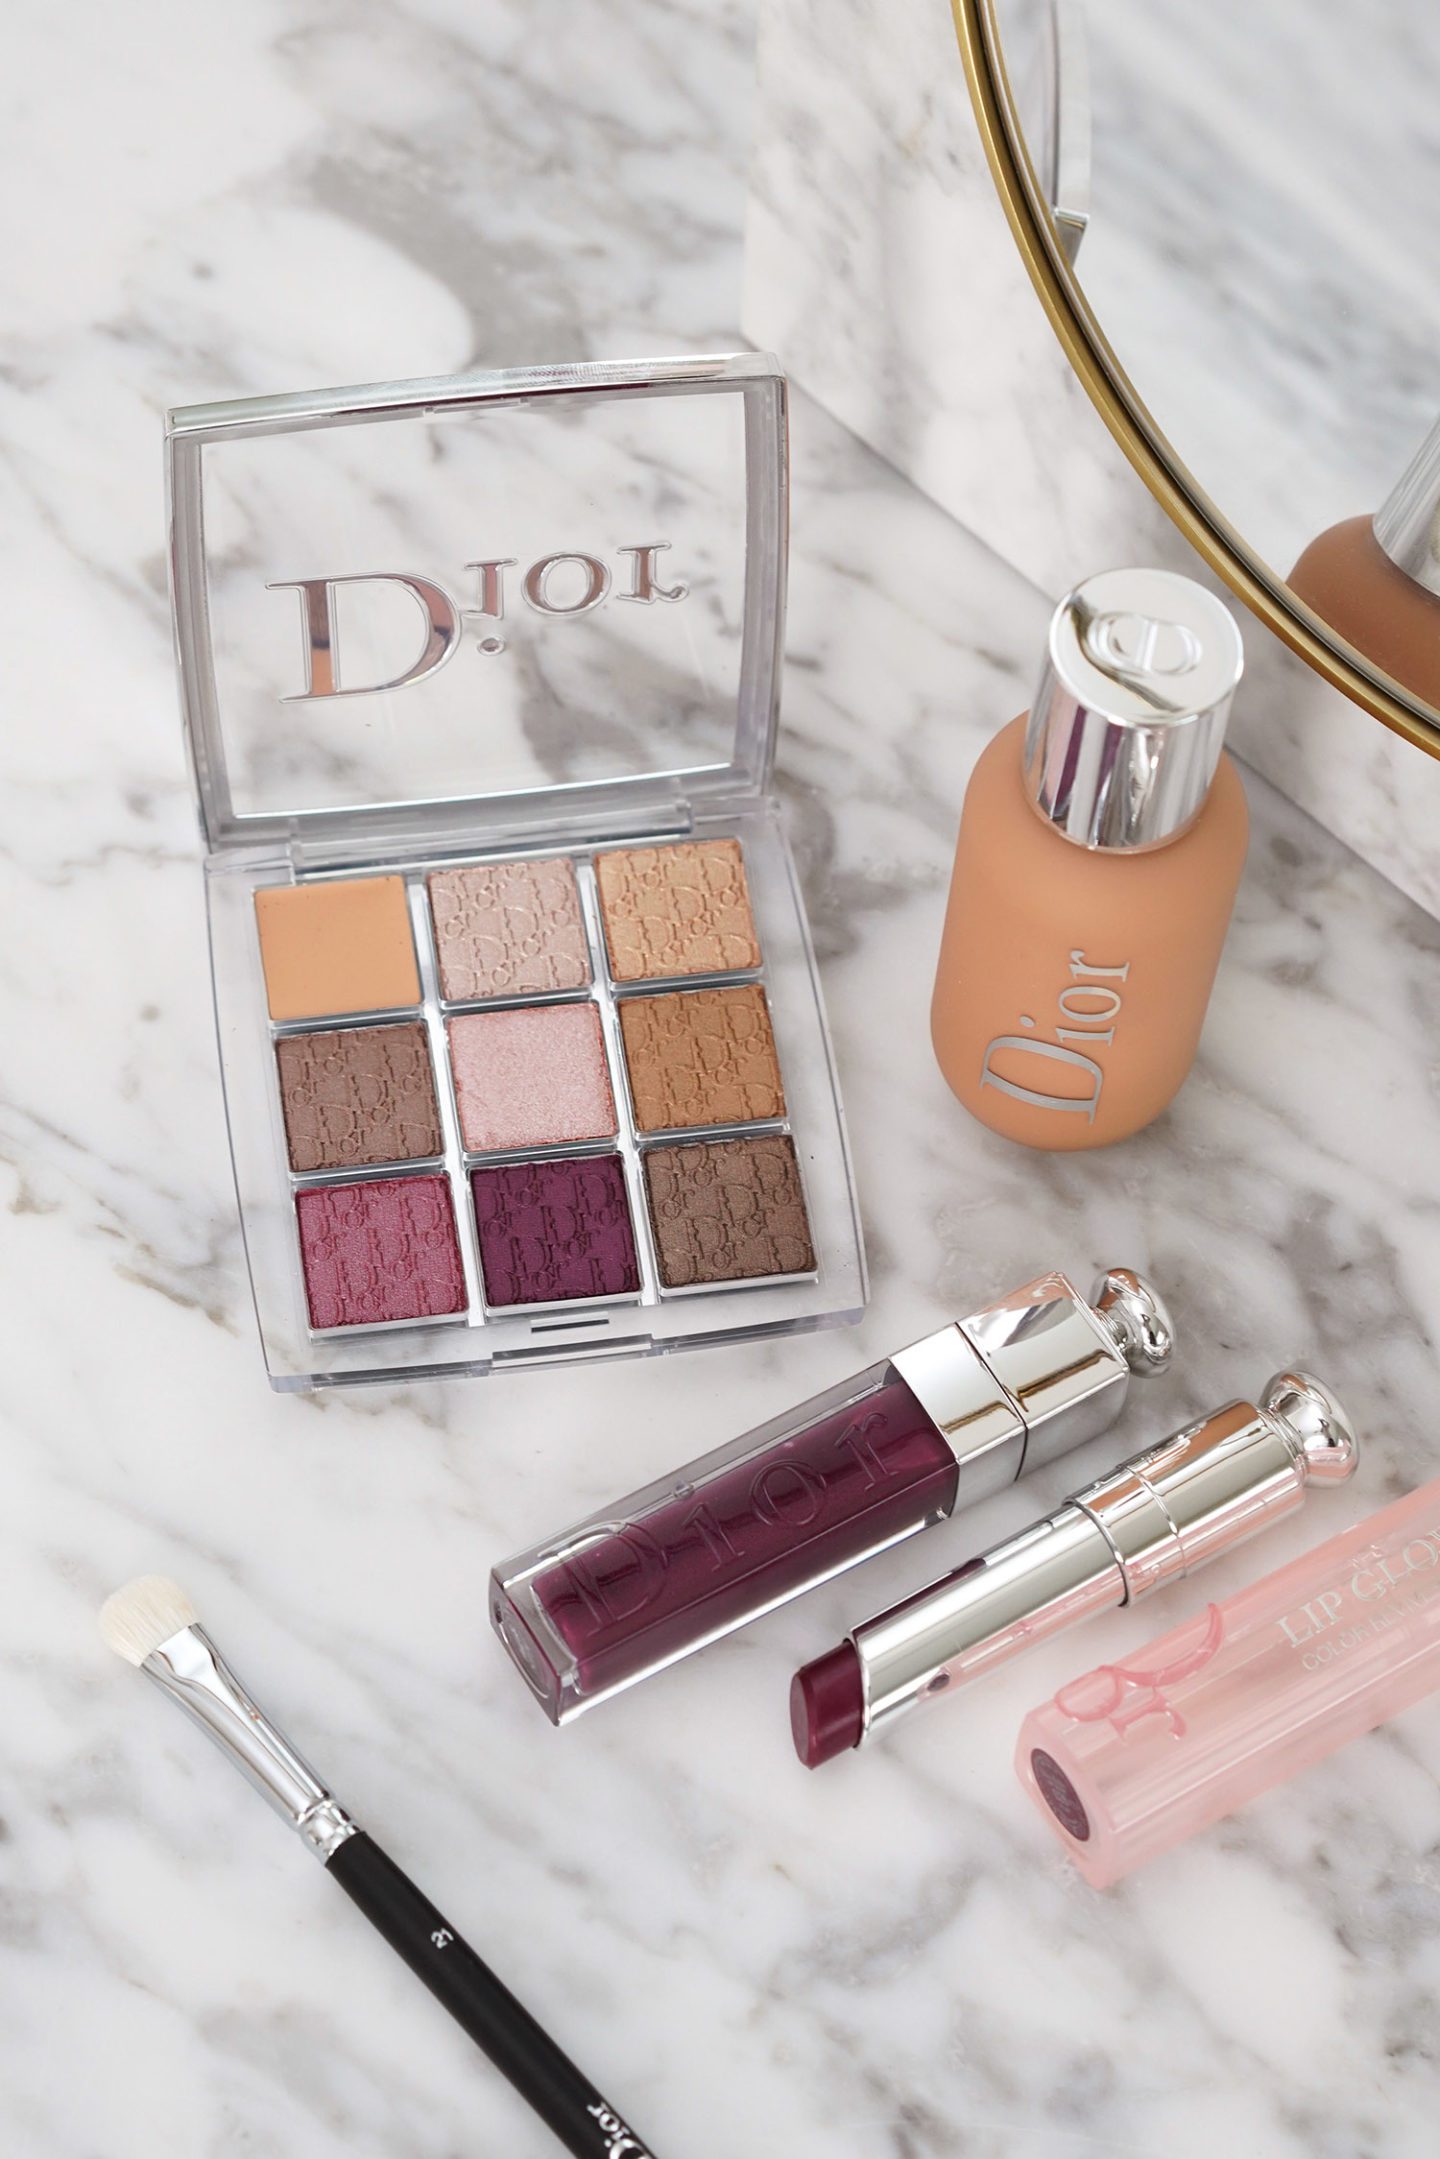 Dior Backstage Makeup Plum